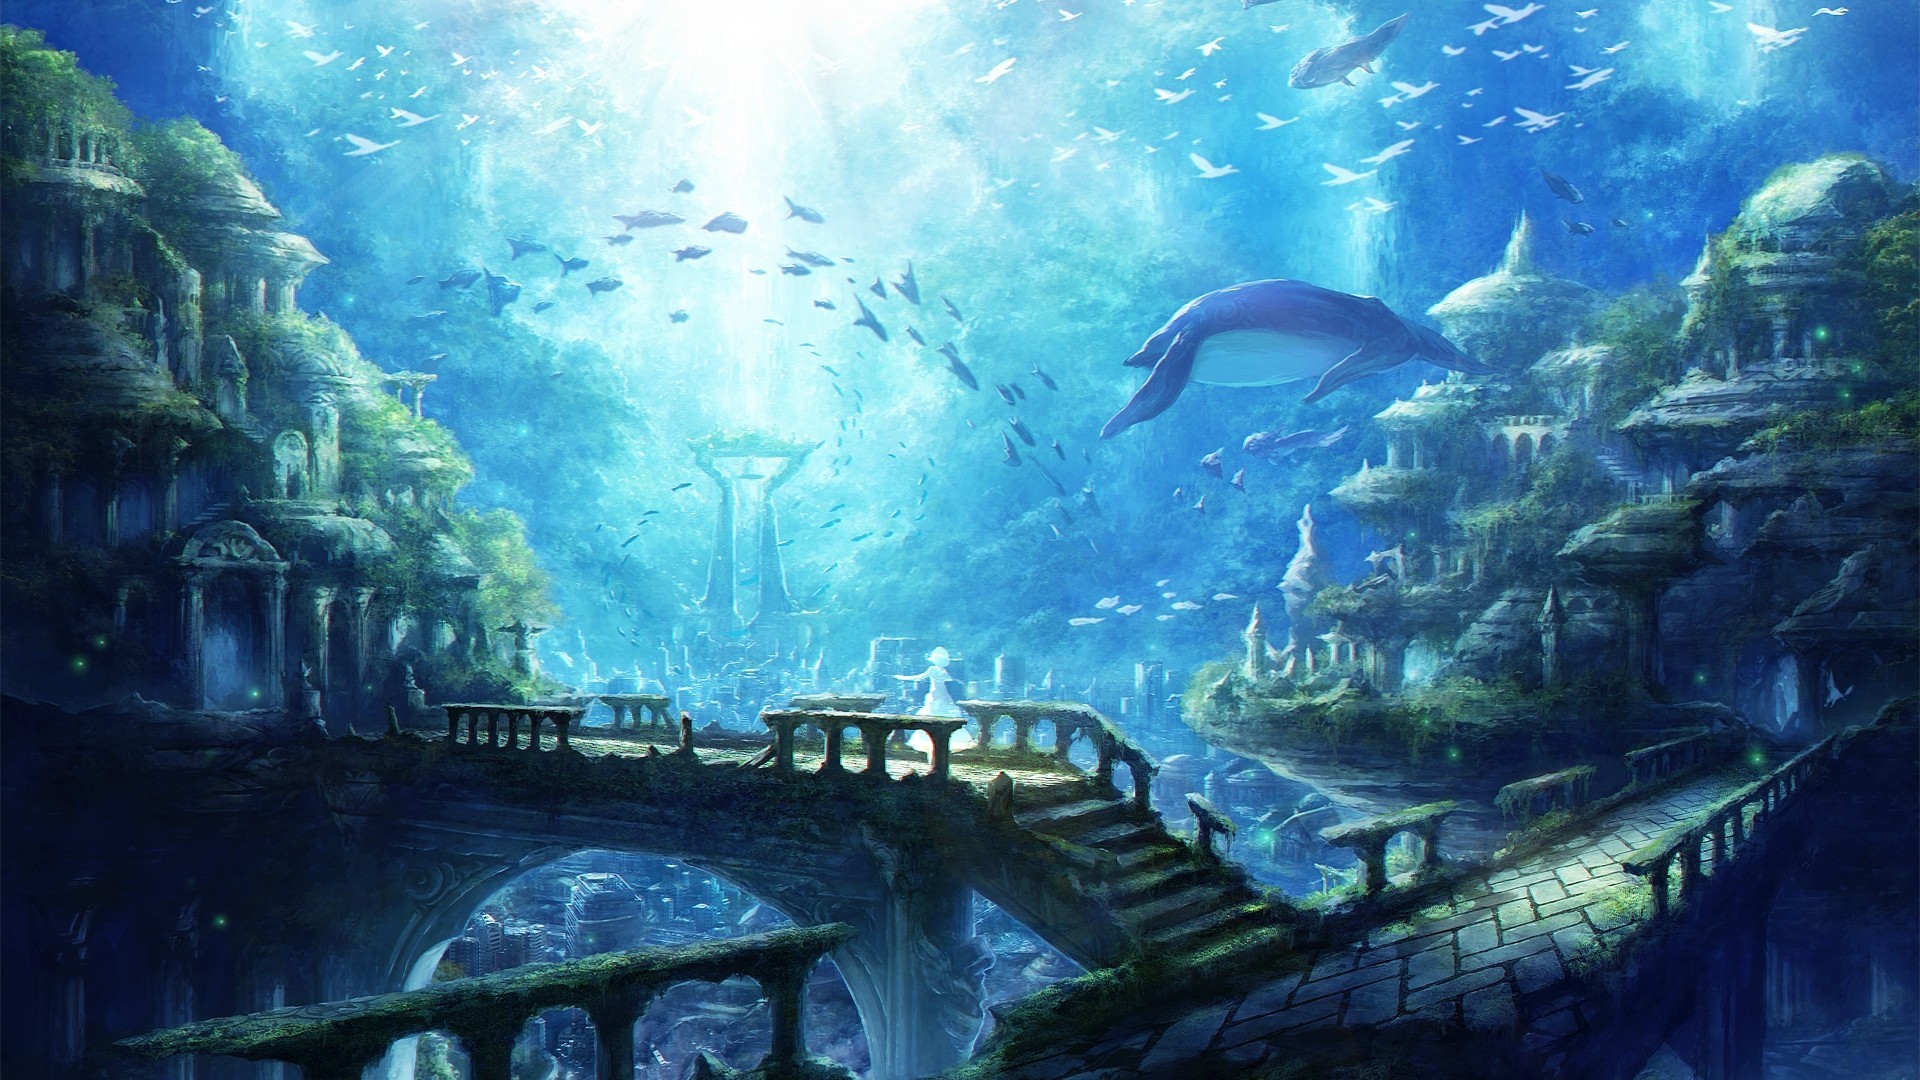 Underwater City, Ruins, Fishes - Underwater City - HD Wallpaper 